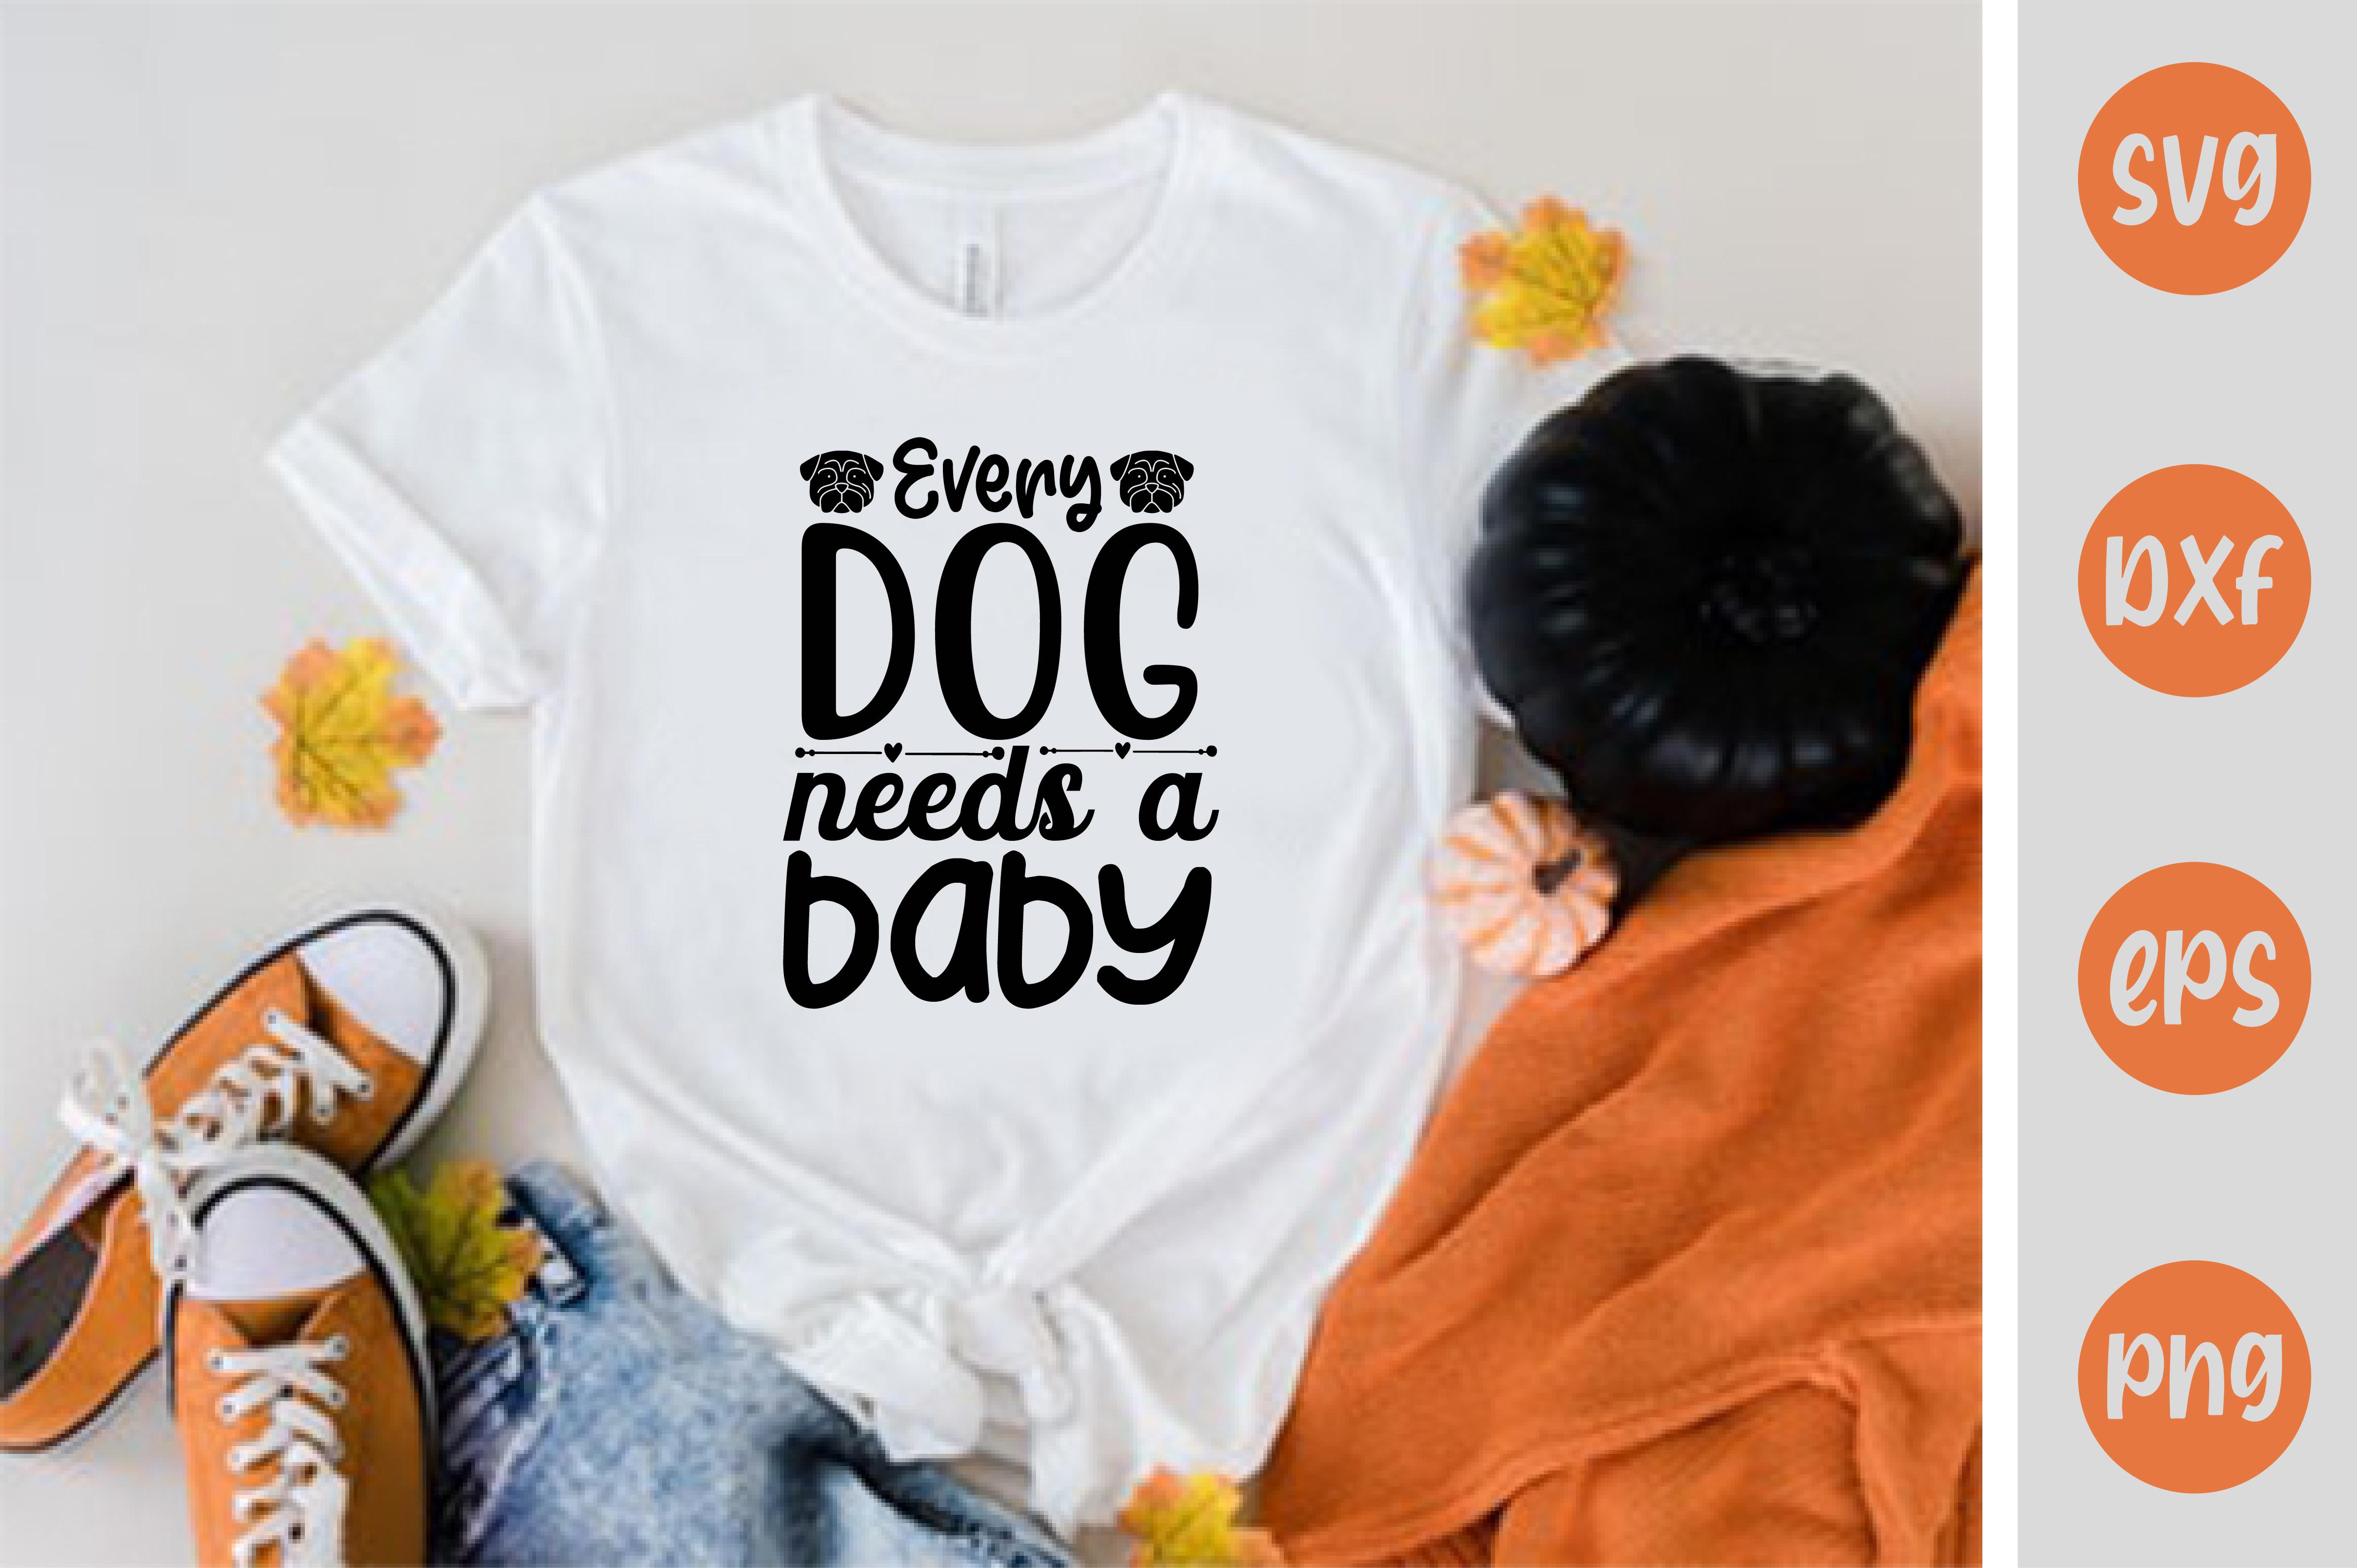 Every Dog Needs a Baby